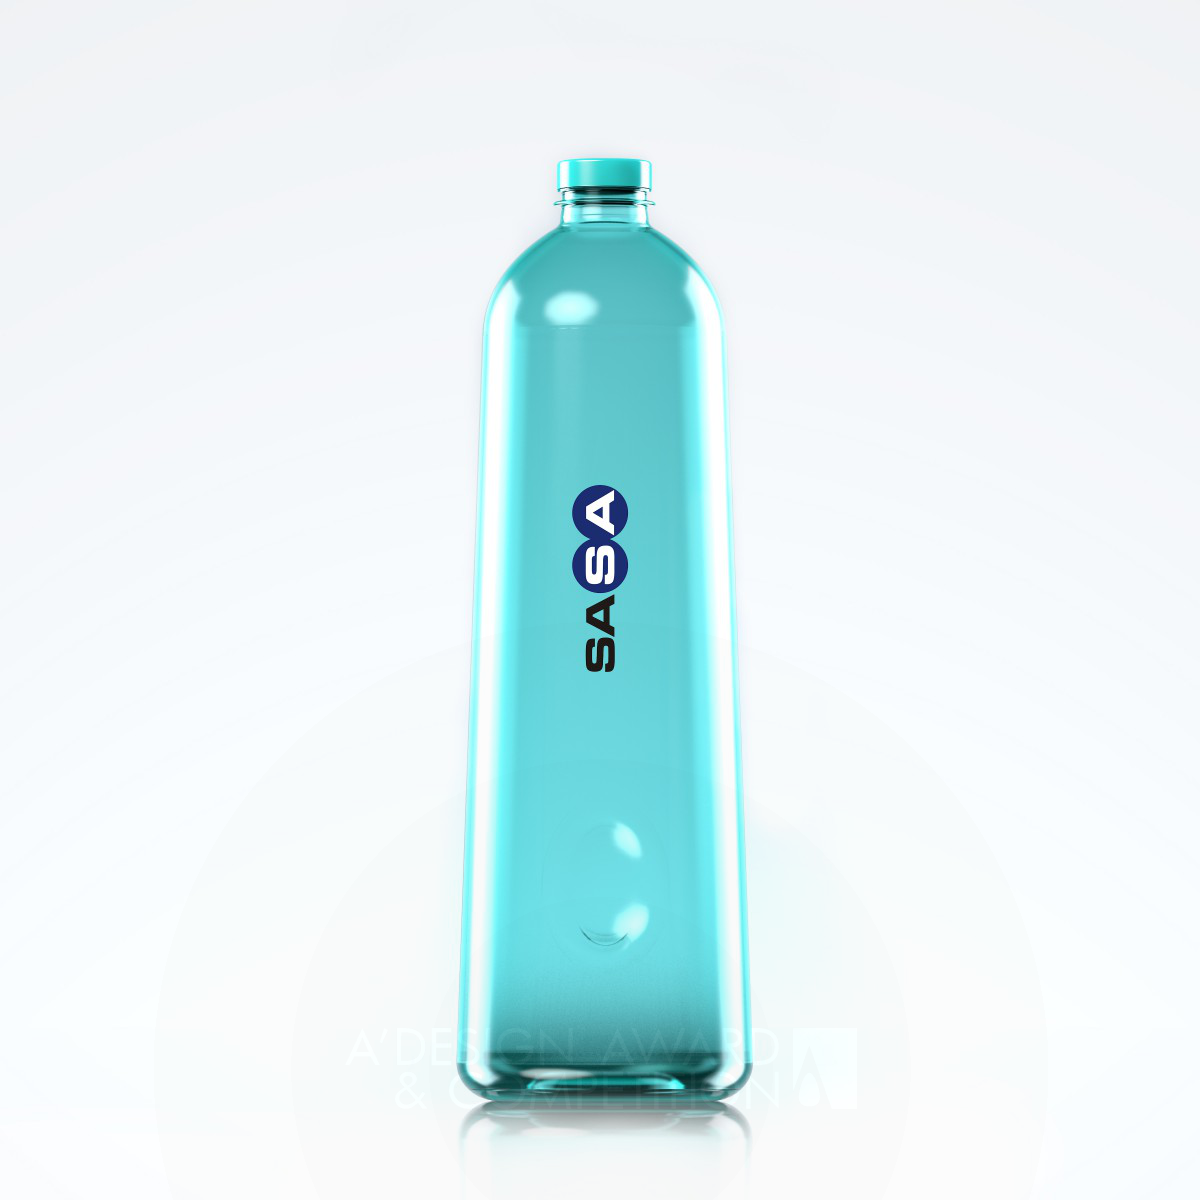 SASA Bottle Water Packaging by Hakan Gürsu